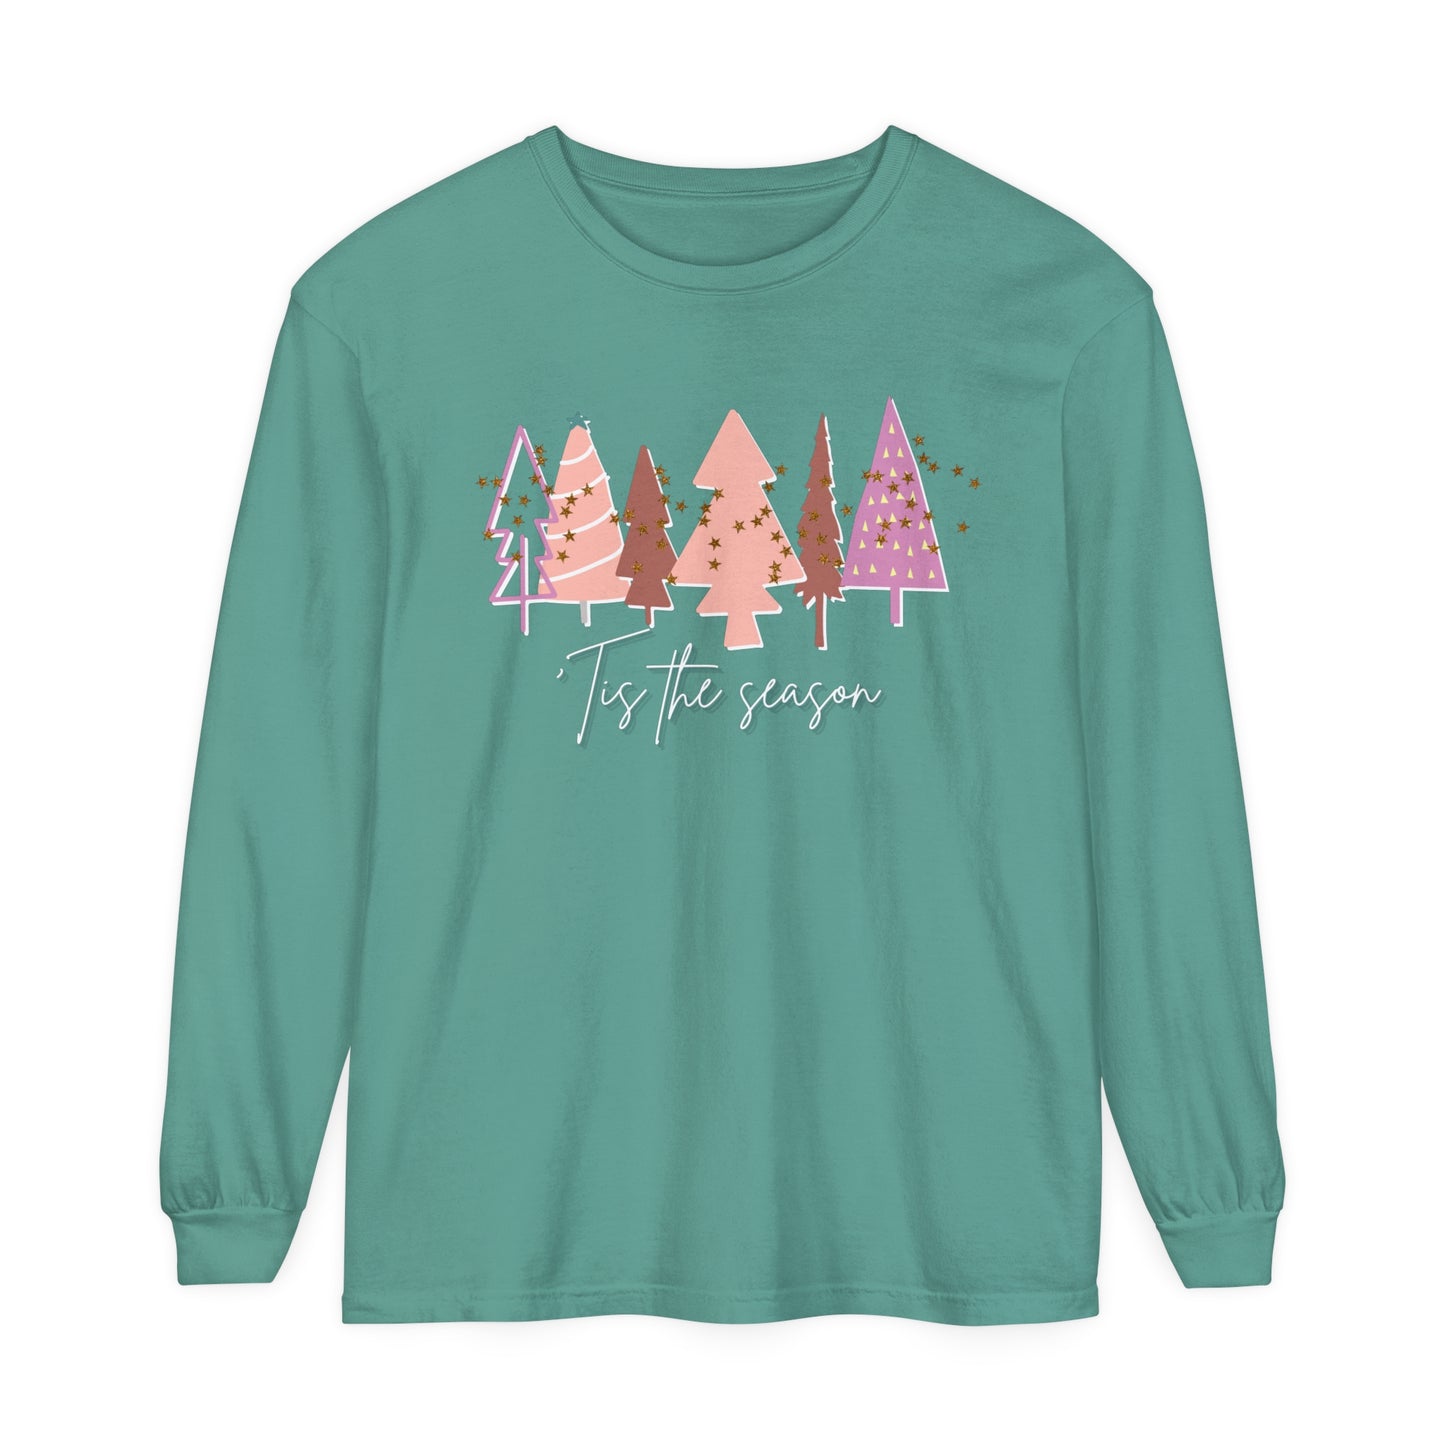 Printify Women's 'Tis the Season Light Green & Pink Christmas Tree Shirt, a Comfort Colors Holiday Tee. Winter wardrobe cozy and stylish.